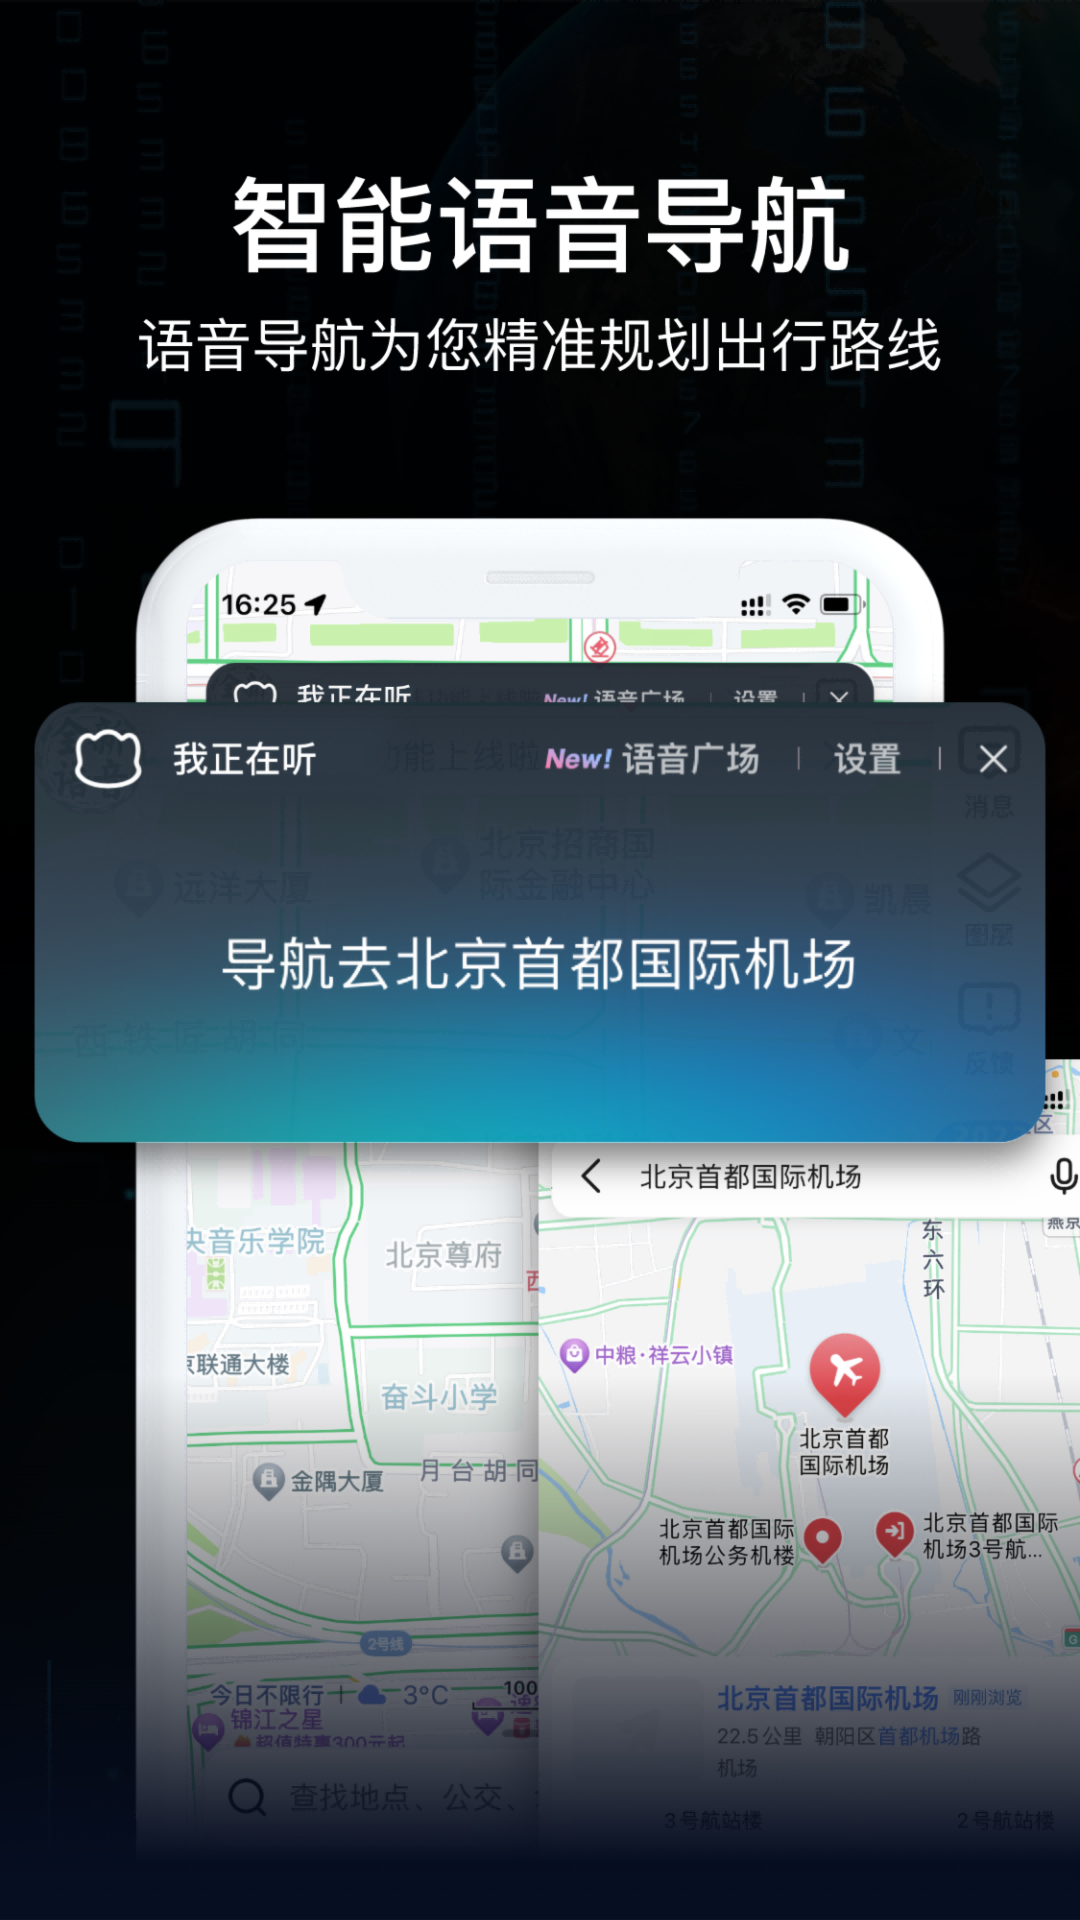 AR实况导航地图手机软件app截图